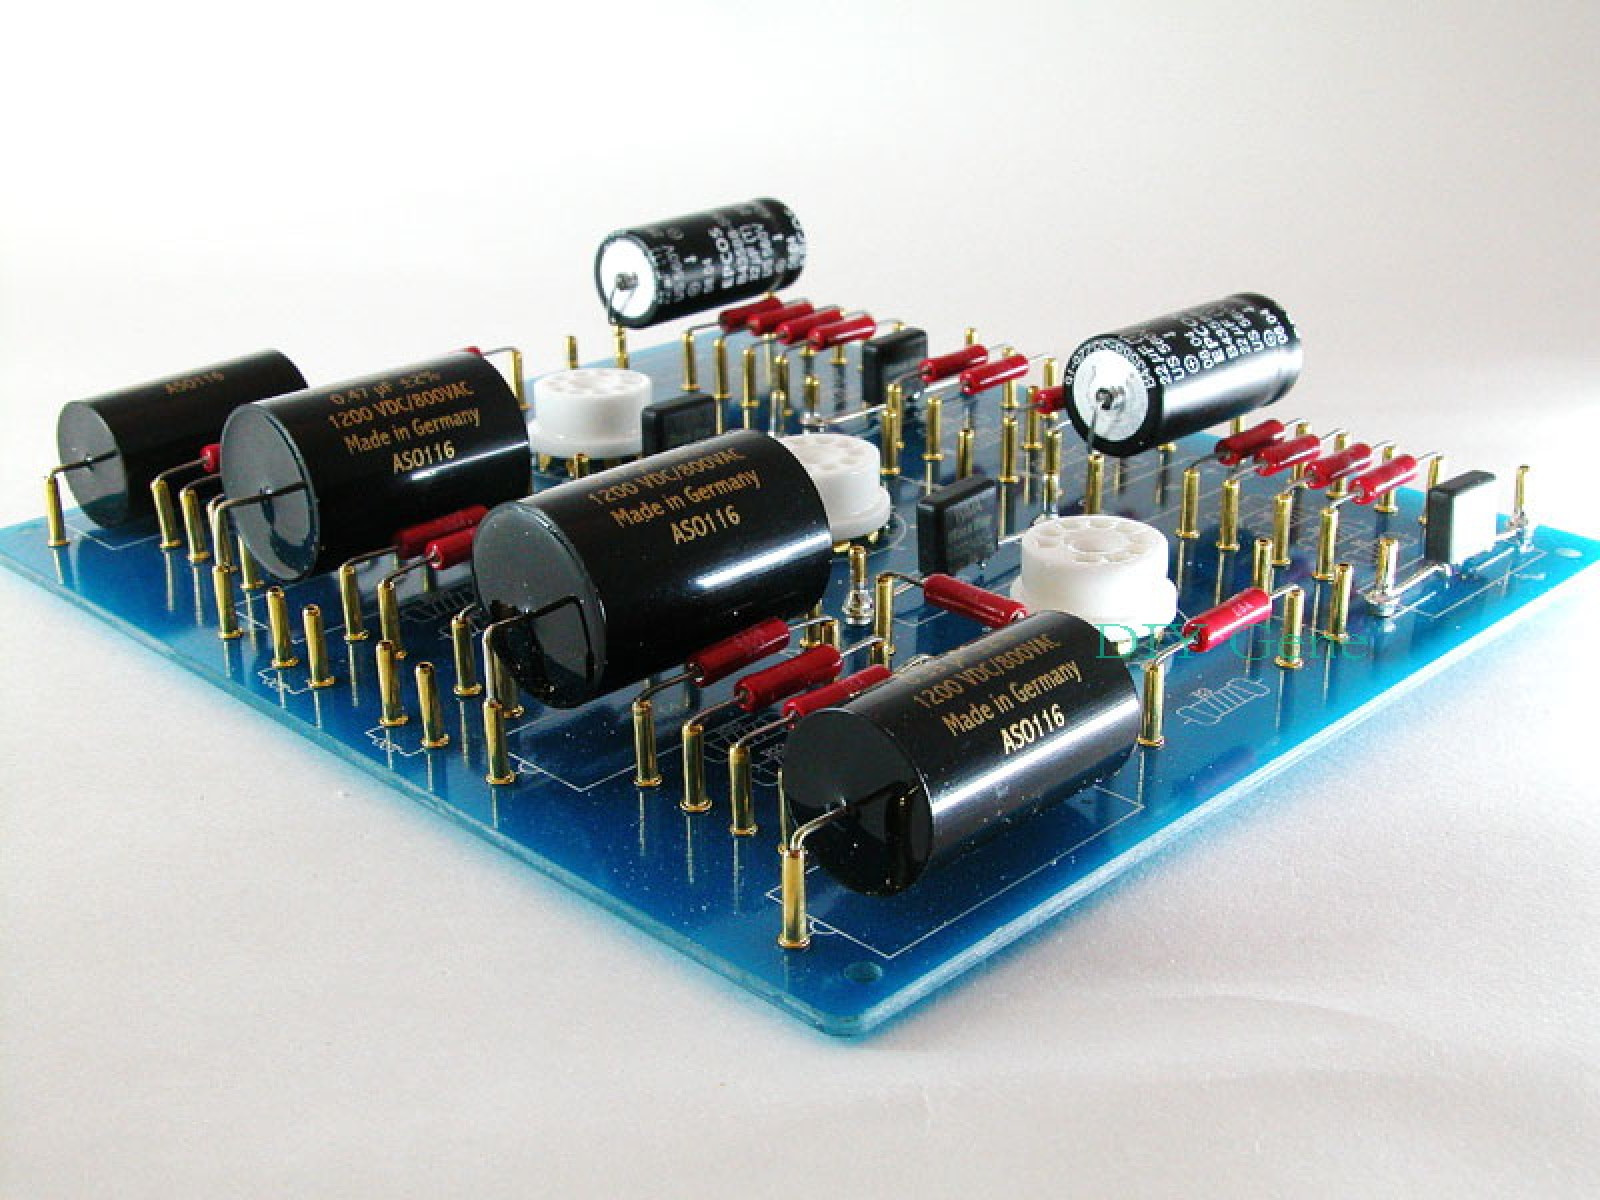 Best ideas about DIY Tube Amp Kits
. Save or Pin Hi End DIY Tube pre amplifier Kits ref Marantz 7 GA 2M7 Now.